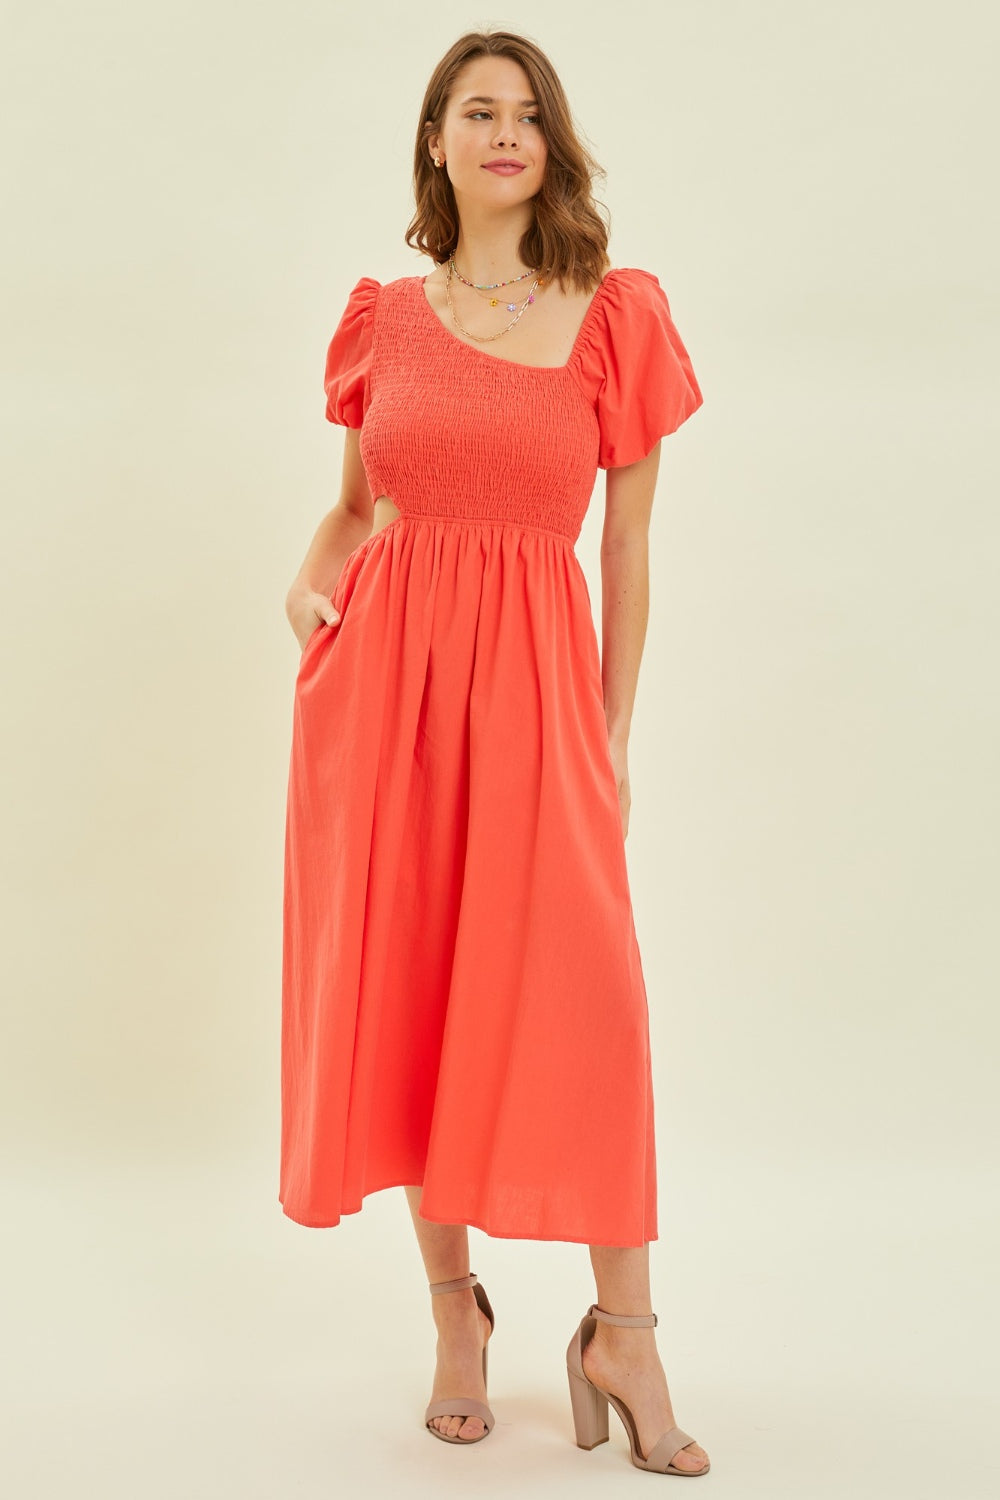 TEEK - Cherry Red Smocked Cutout Dress DRESS TEEK Trend   